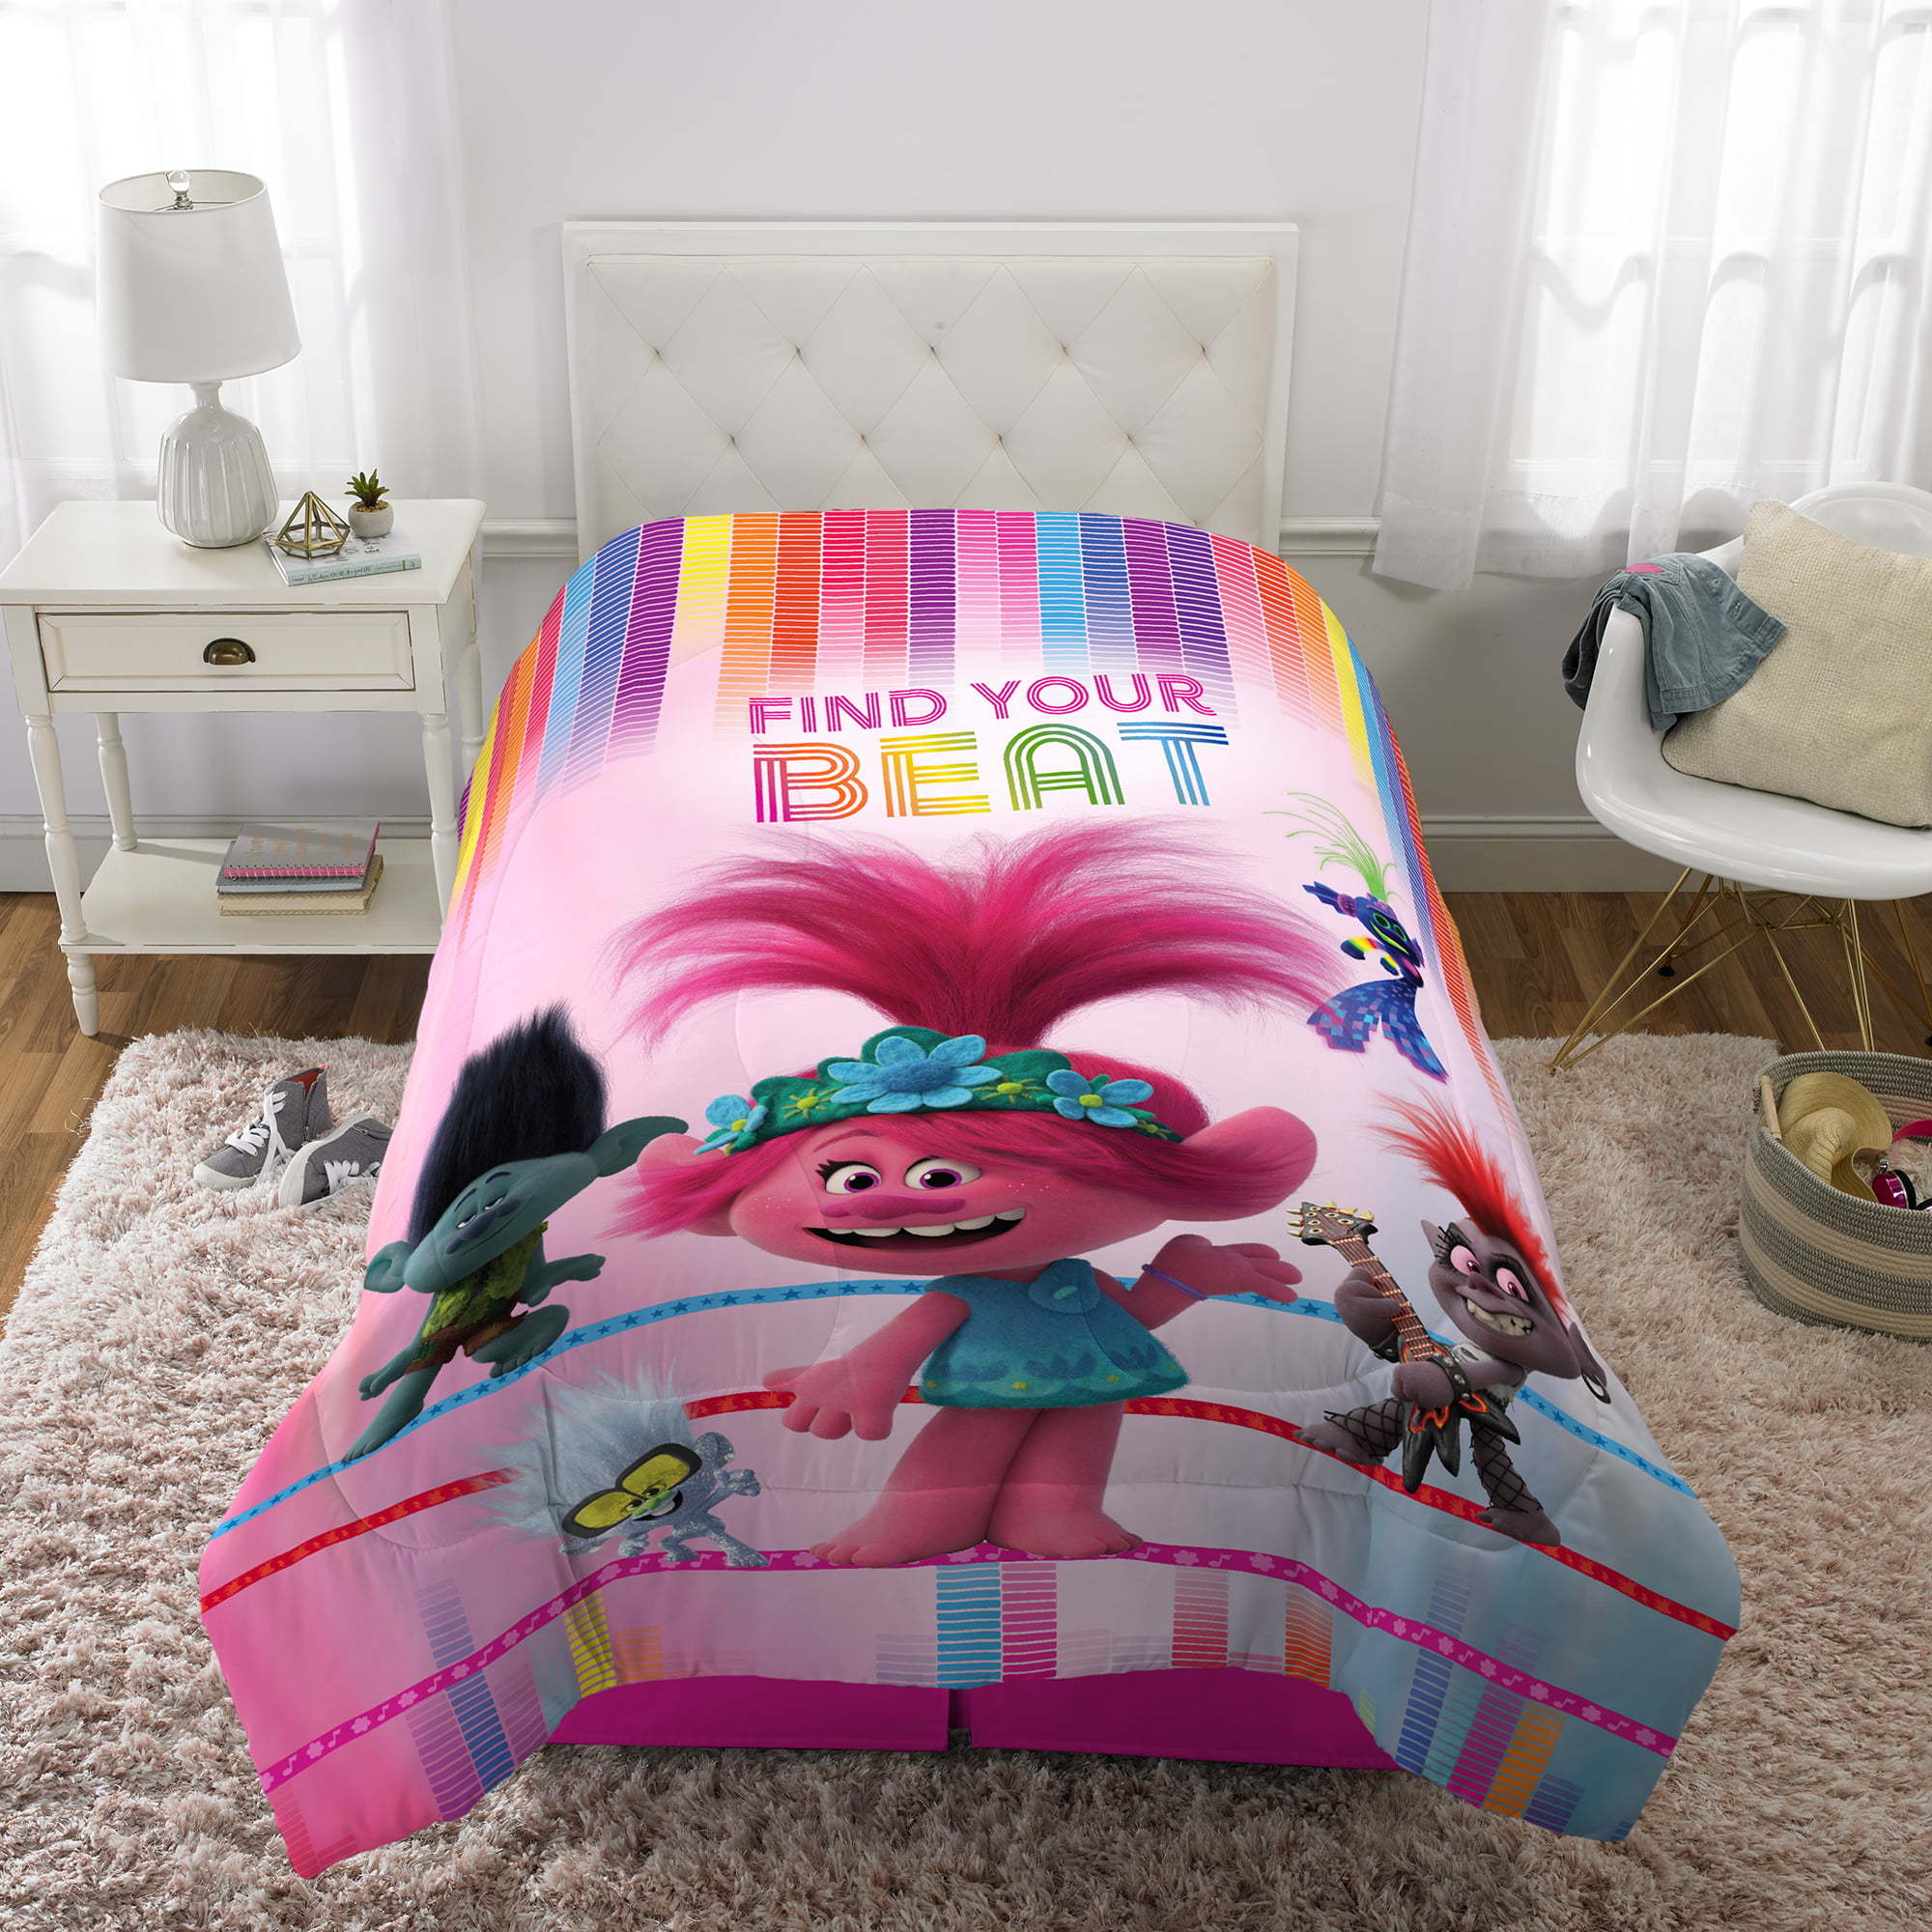 Trolls 2 World Tour 2-piece Comforter and Sham Set Kids Bedding Twin/full for sale online 